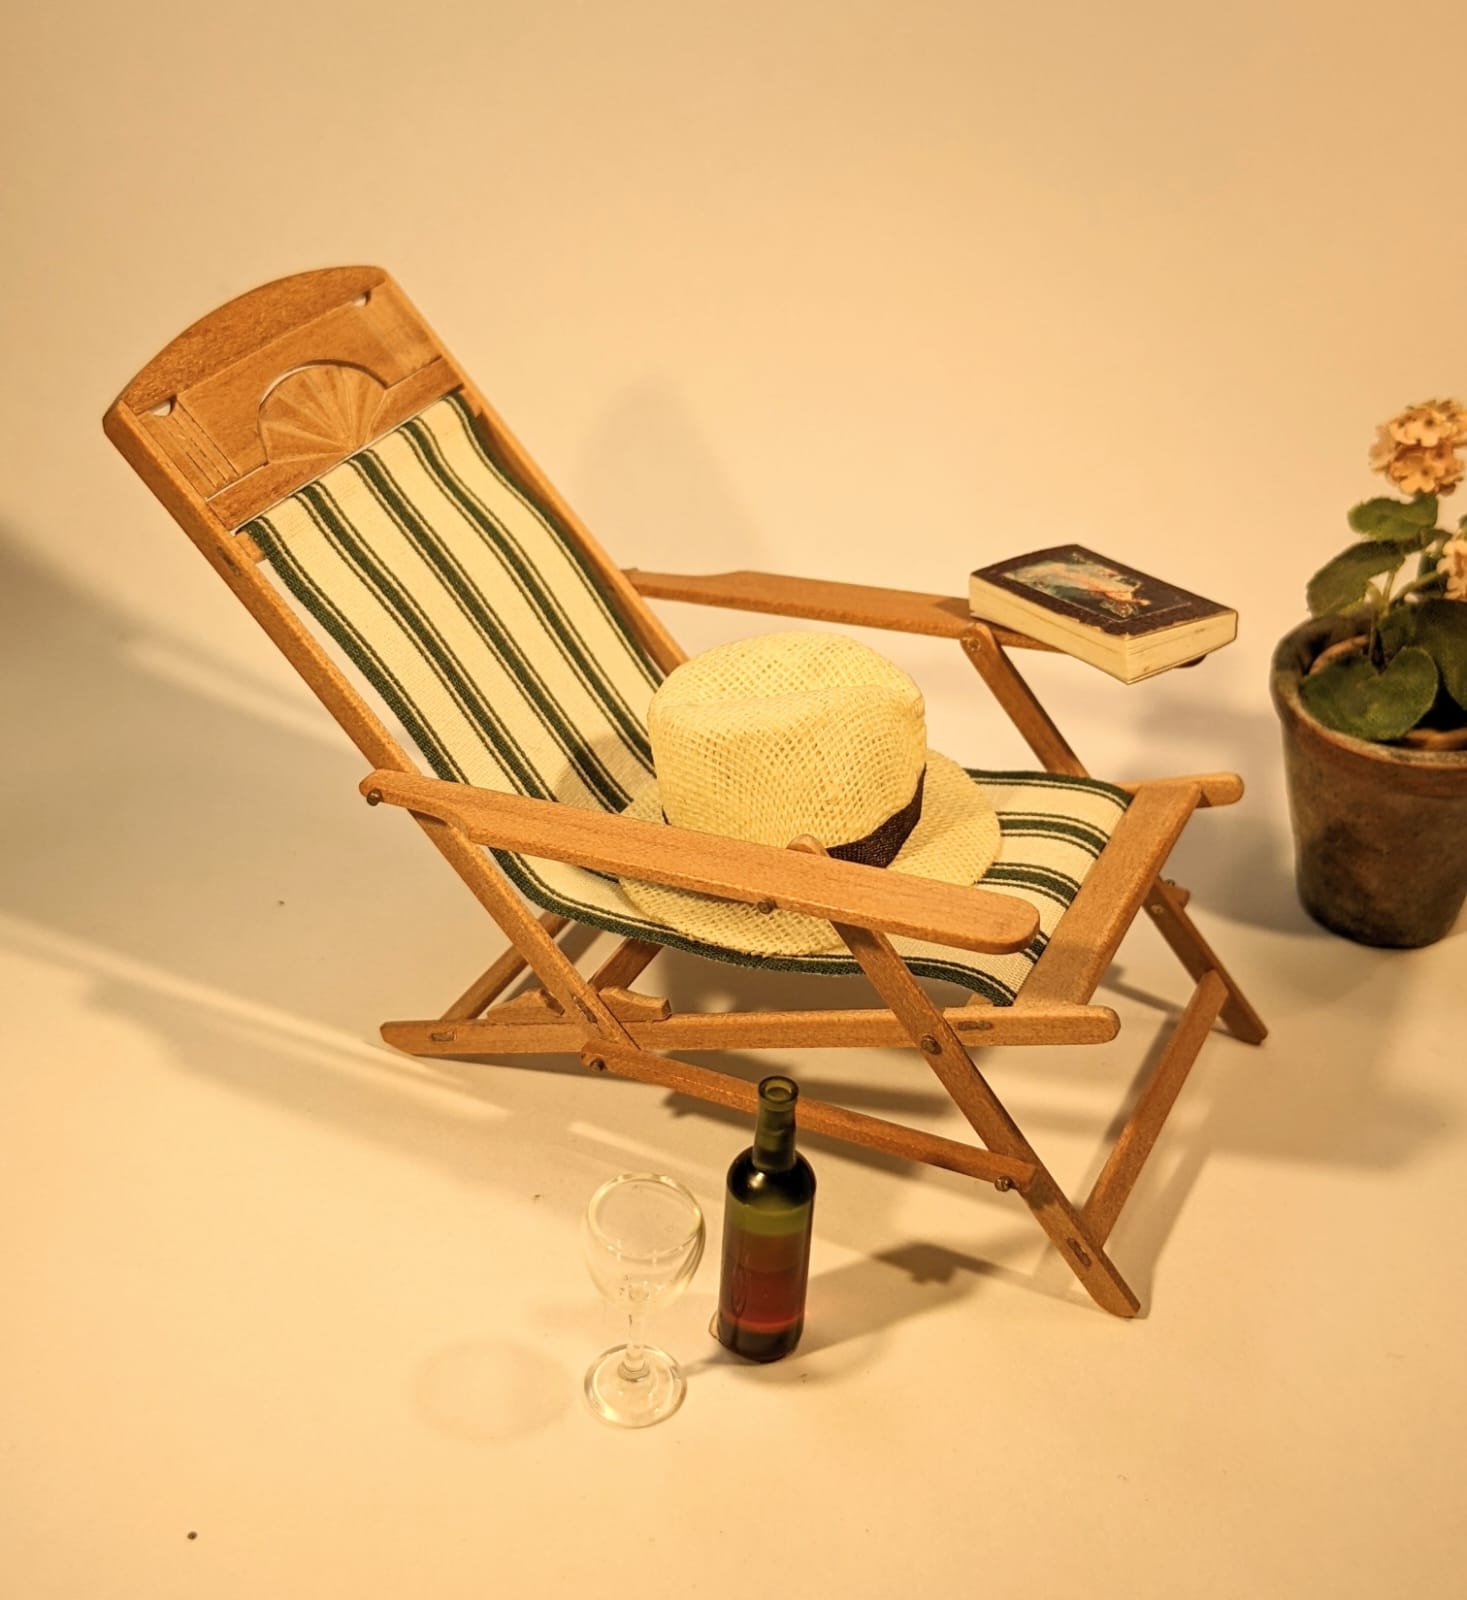 sunburst chair dressed2.jpg